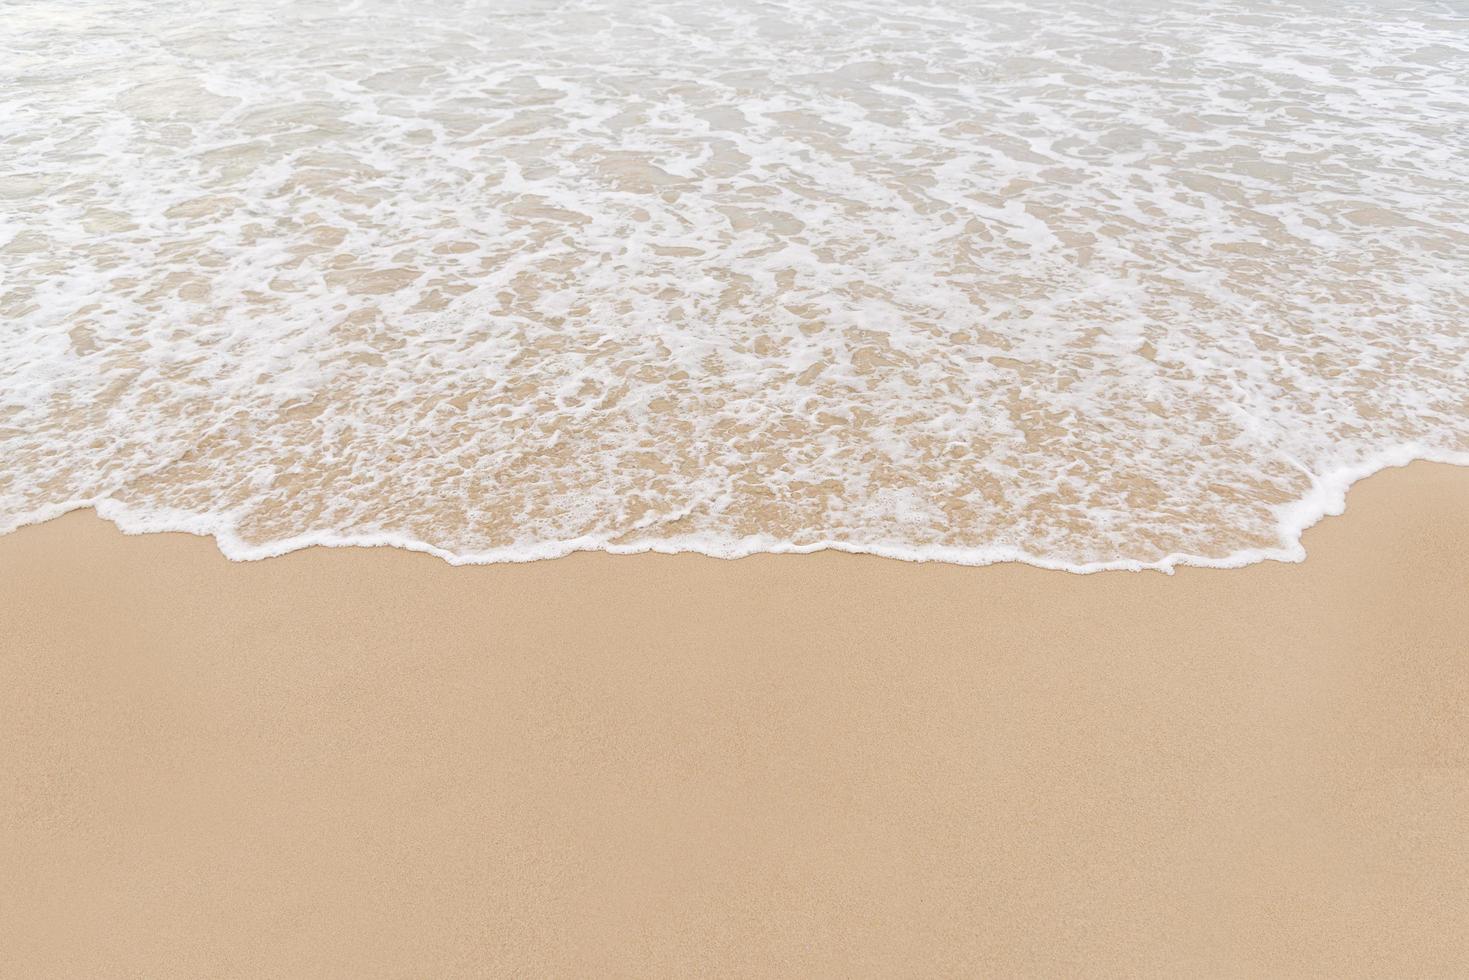 zachte golven op het strand foto